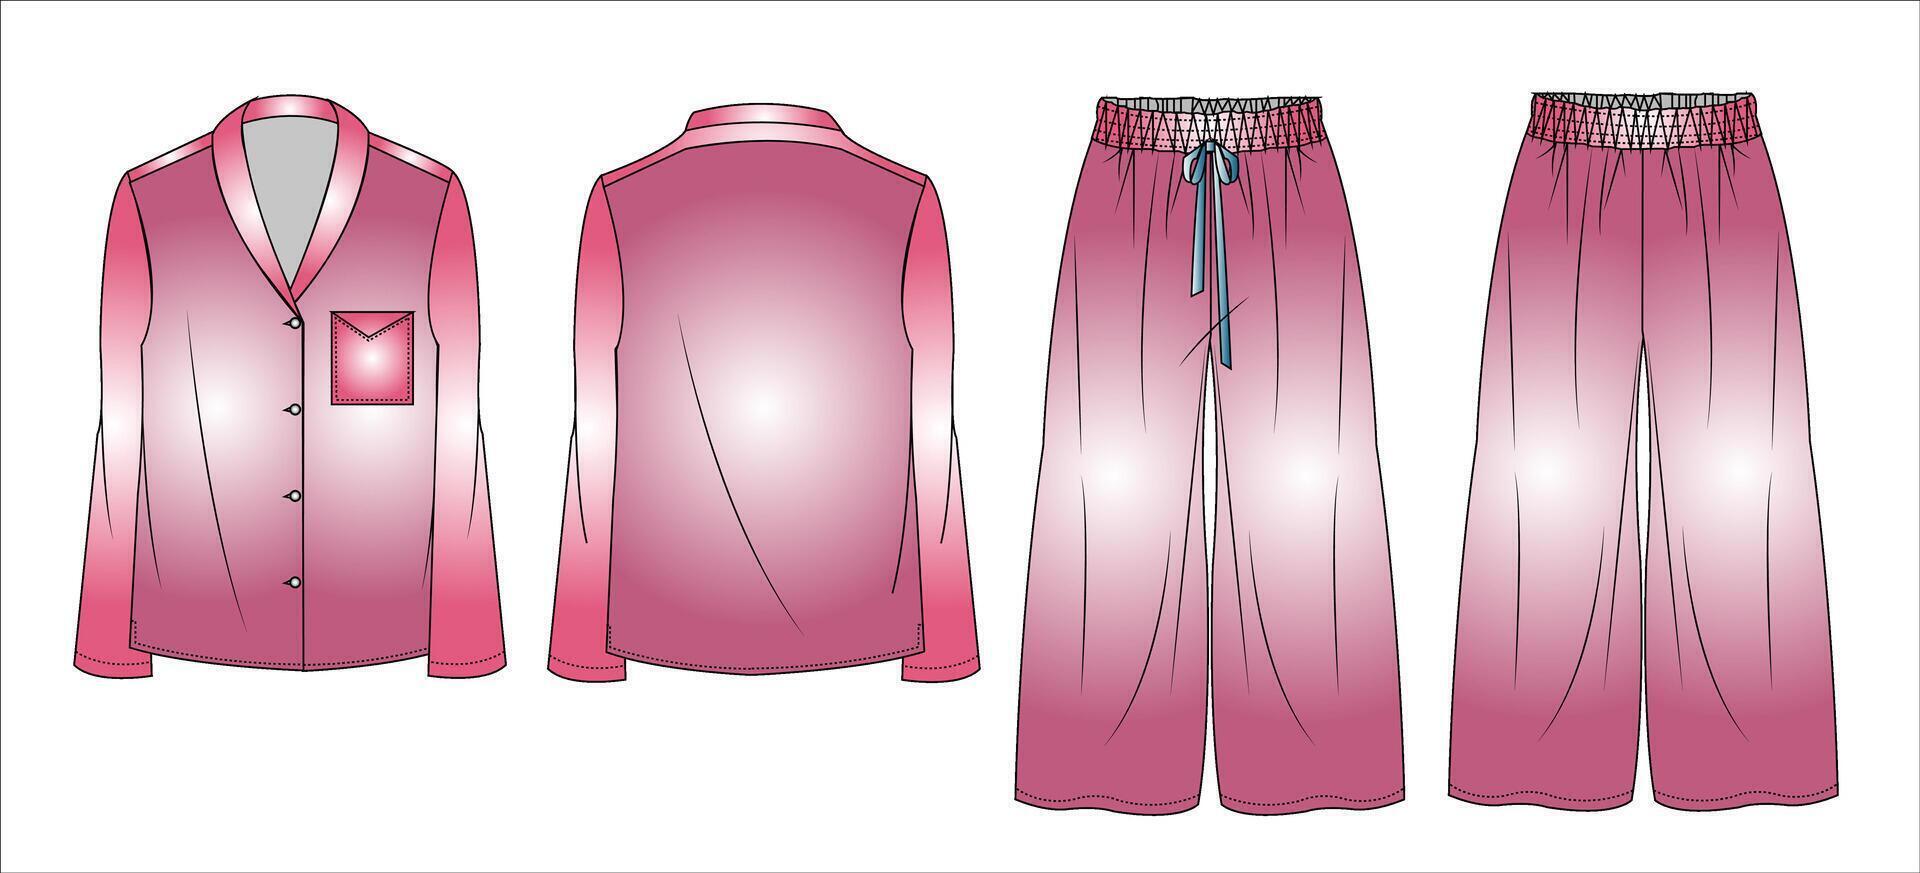 Long sleeve shirt Women's top and bottom Set pajama set and flared long pant sleep wear set fashion flat sketch vector illustration template. cad mockup